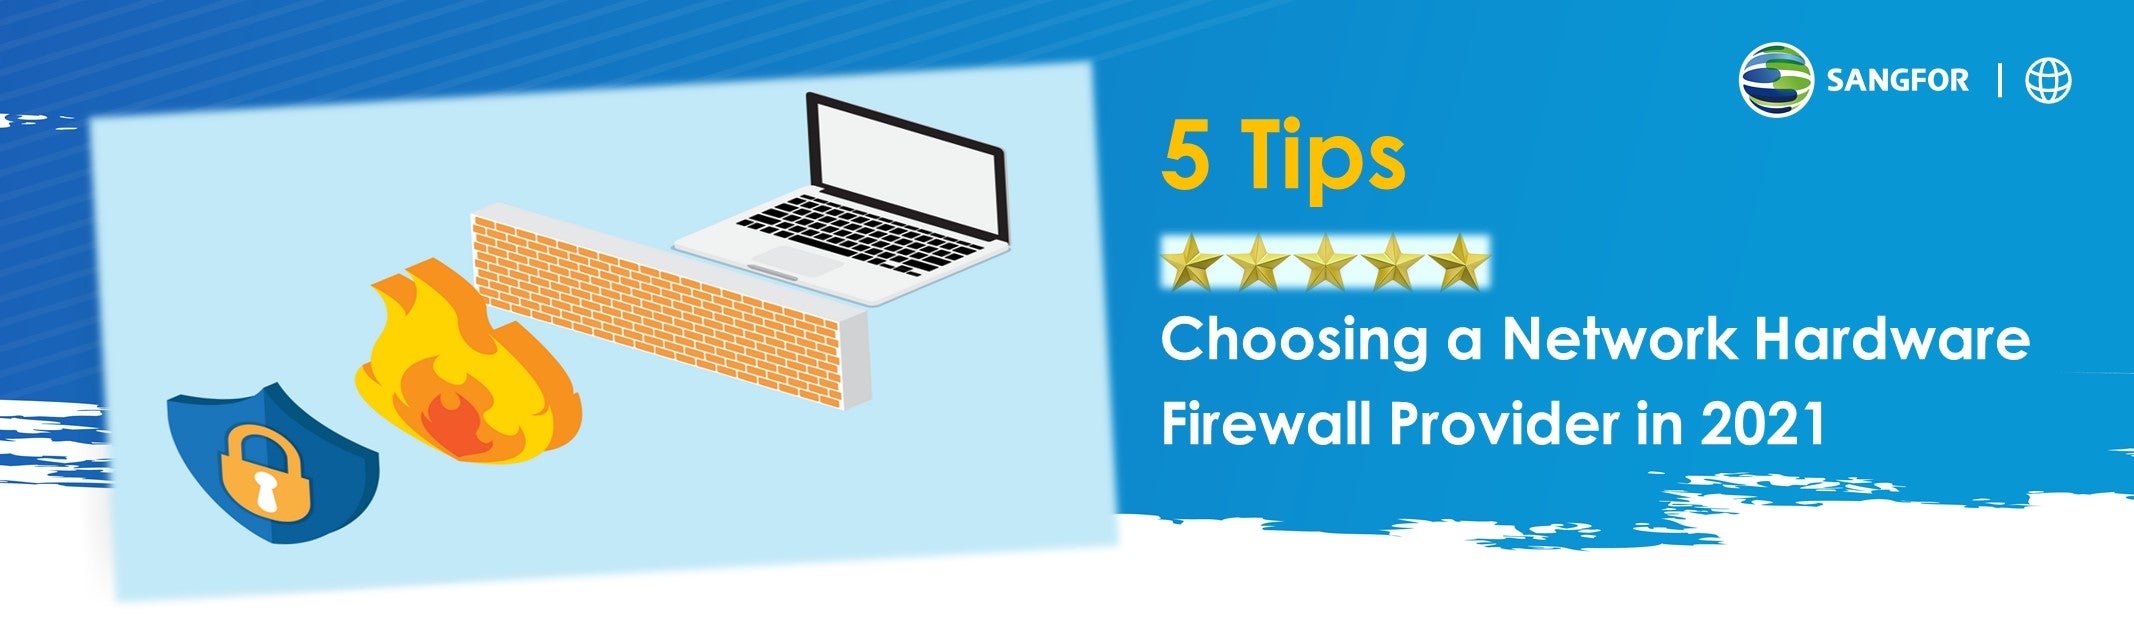 Network Firewall Vendors Article